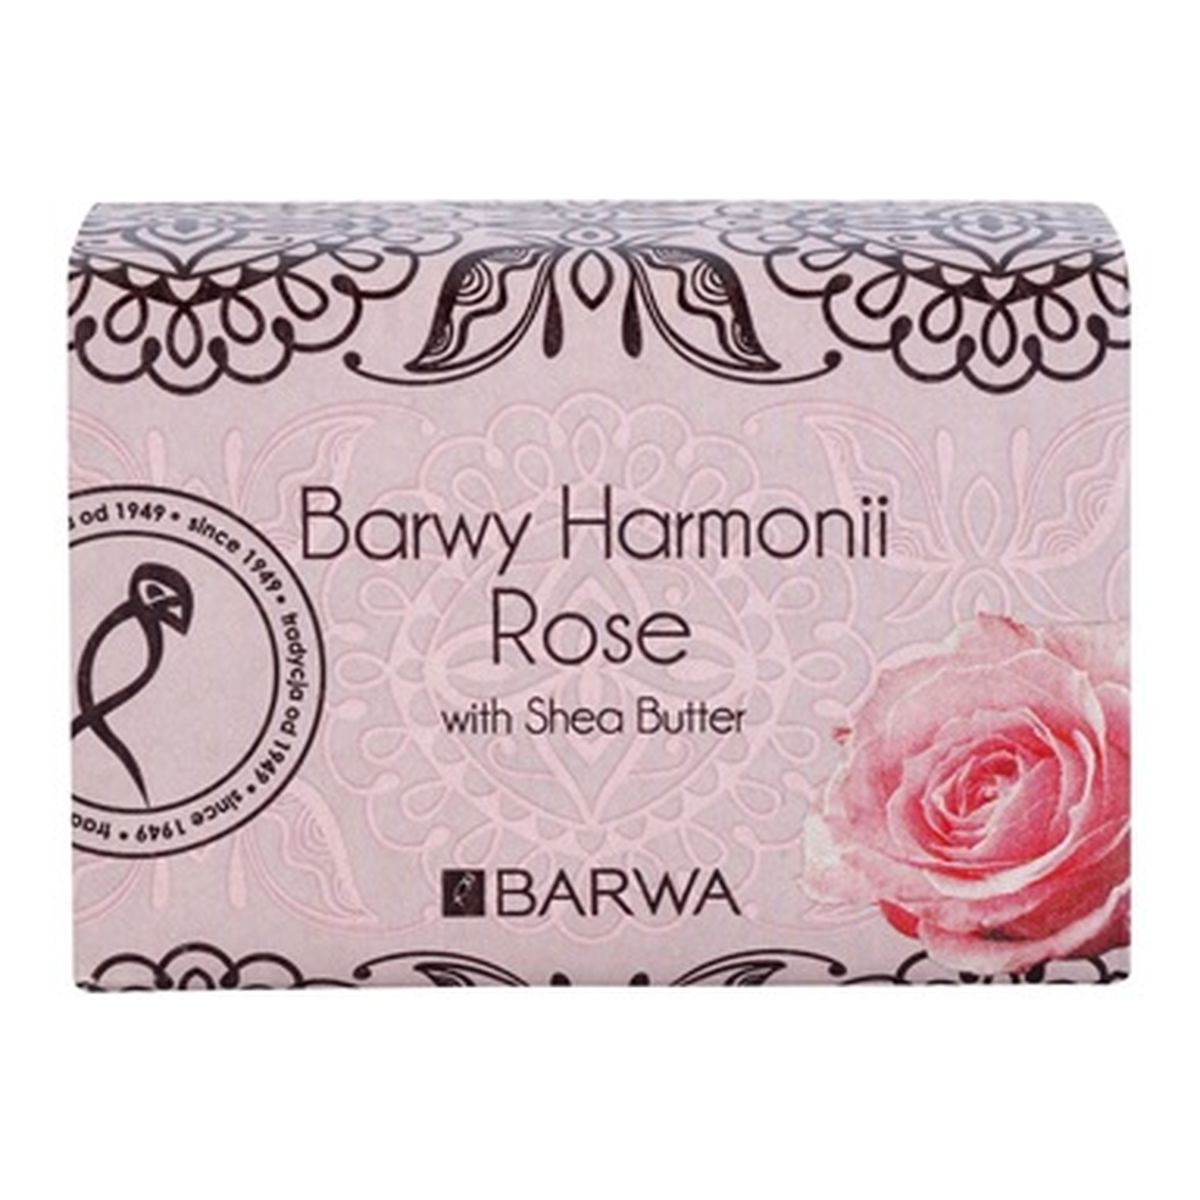 Barwa Rose Barwy Harmonii Mydło Różane 200g